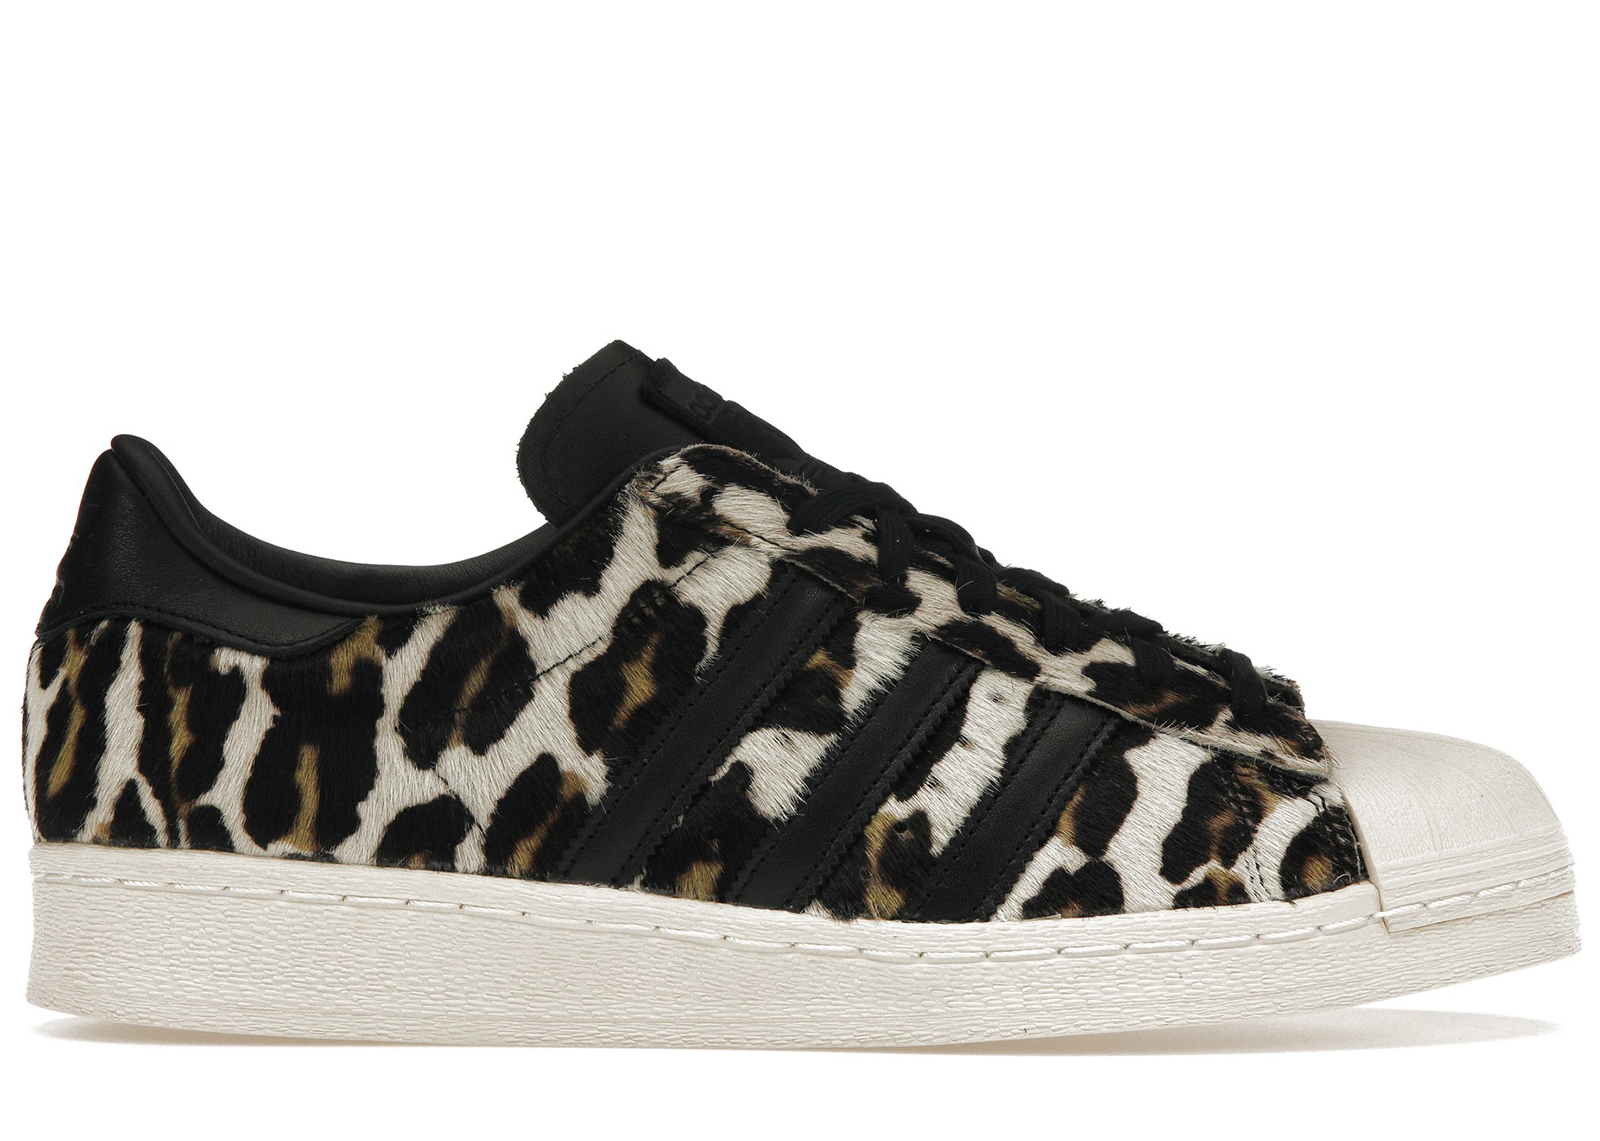 Adidas cloud foam comfort leopard sneakers. Super... - Depop